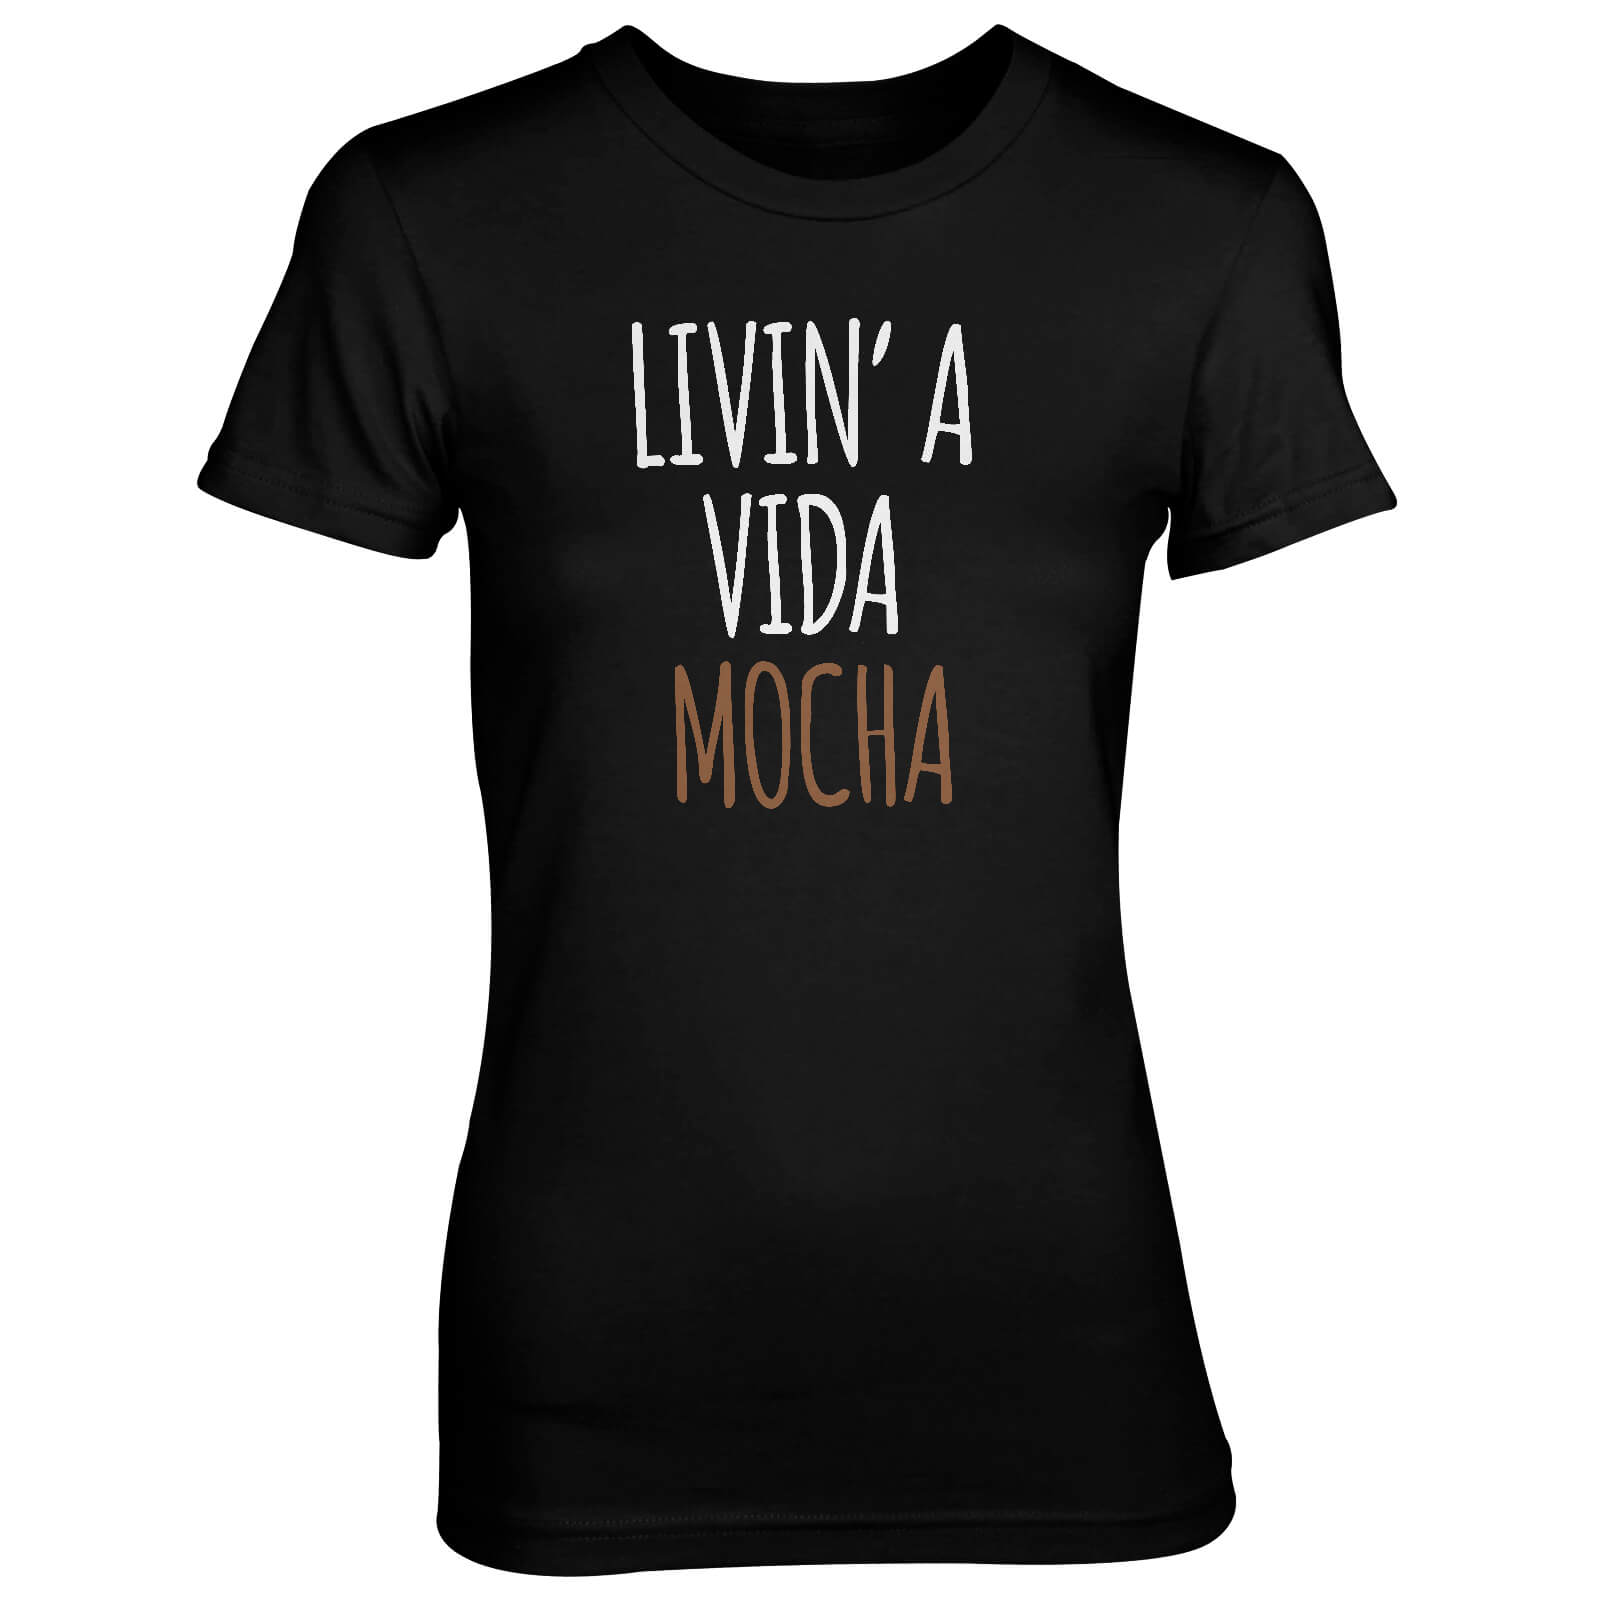 Livin' A Vida Mocha Women's Black T-Shirt - M - Black